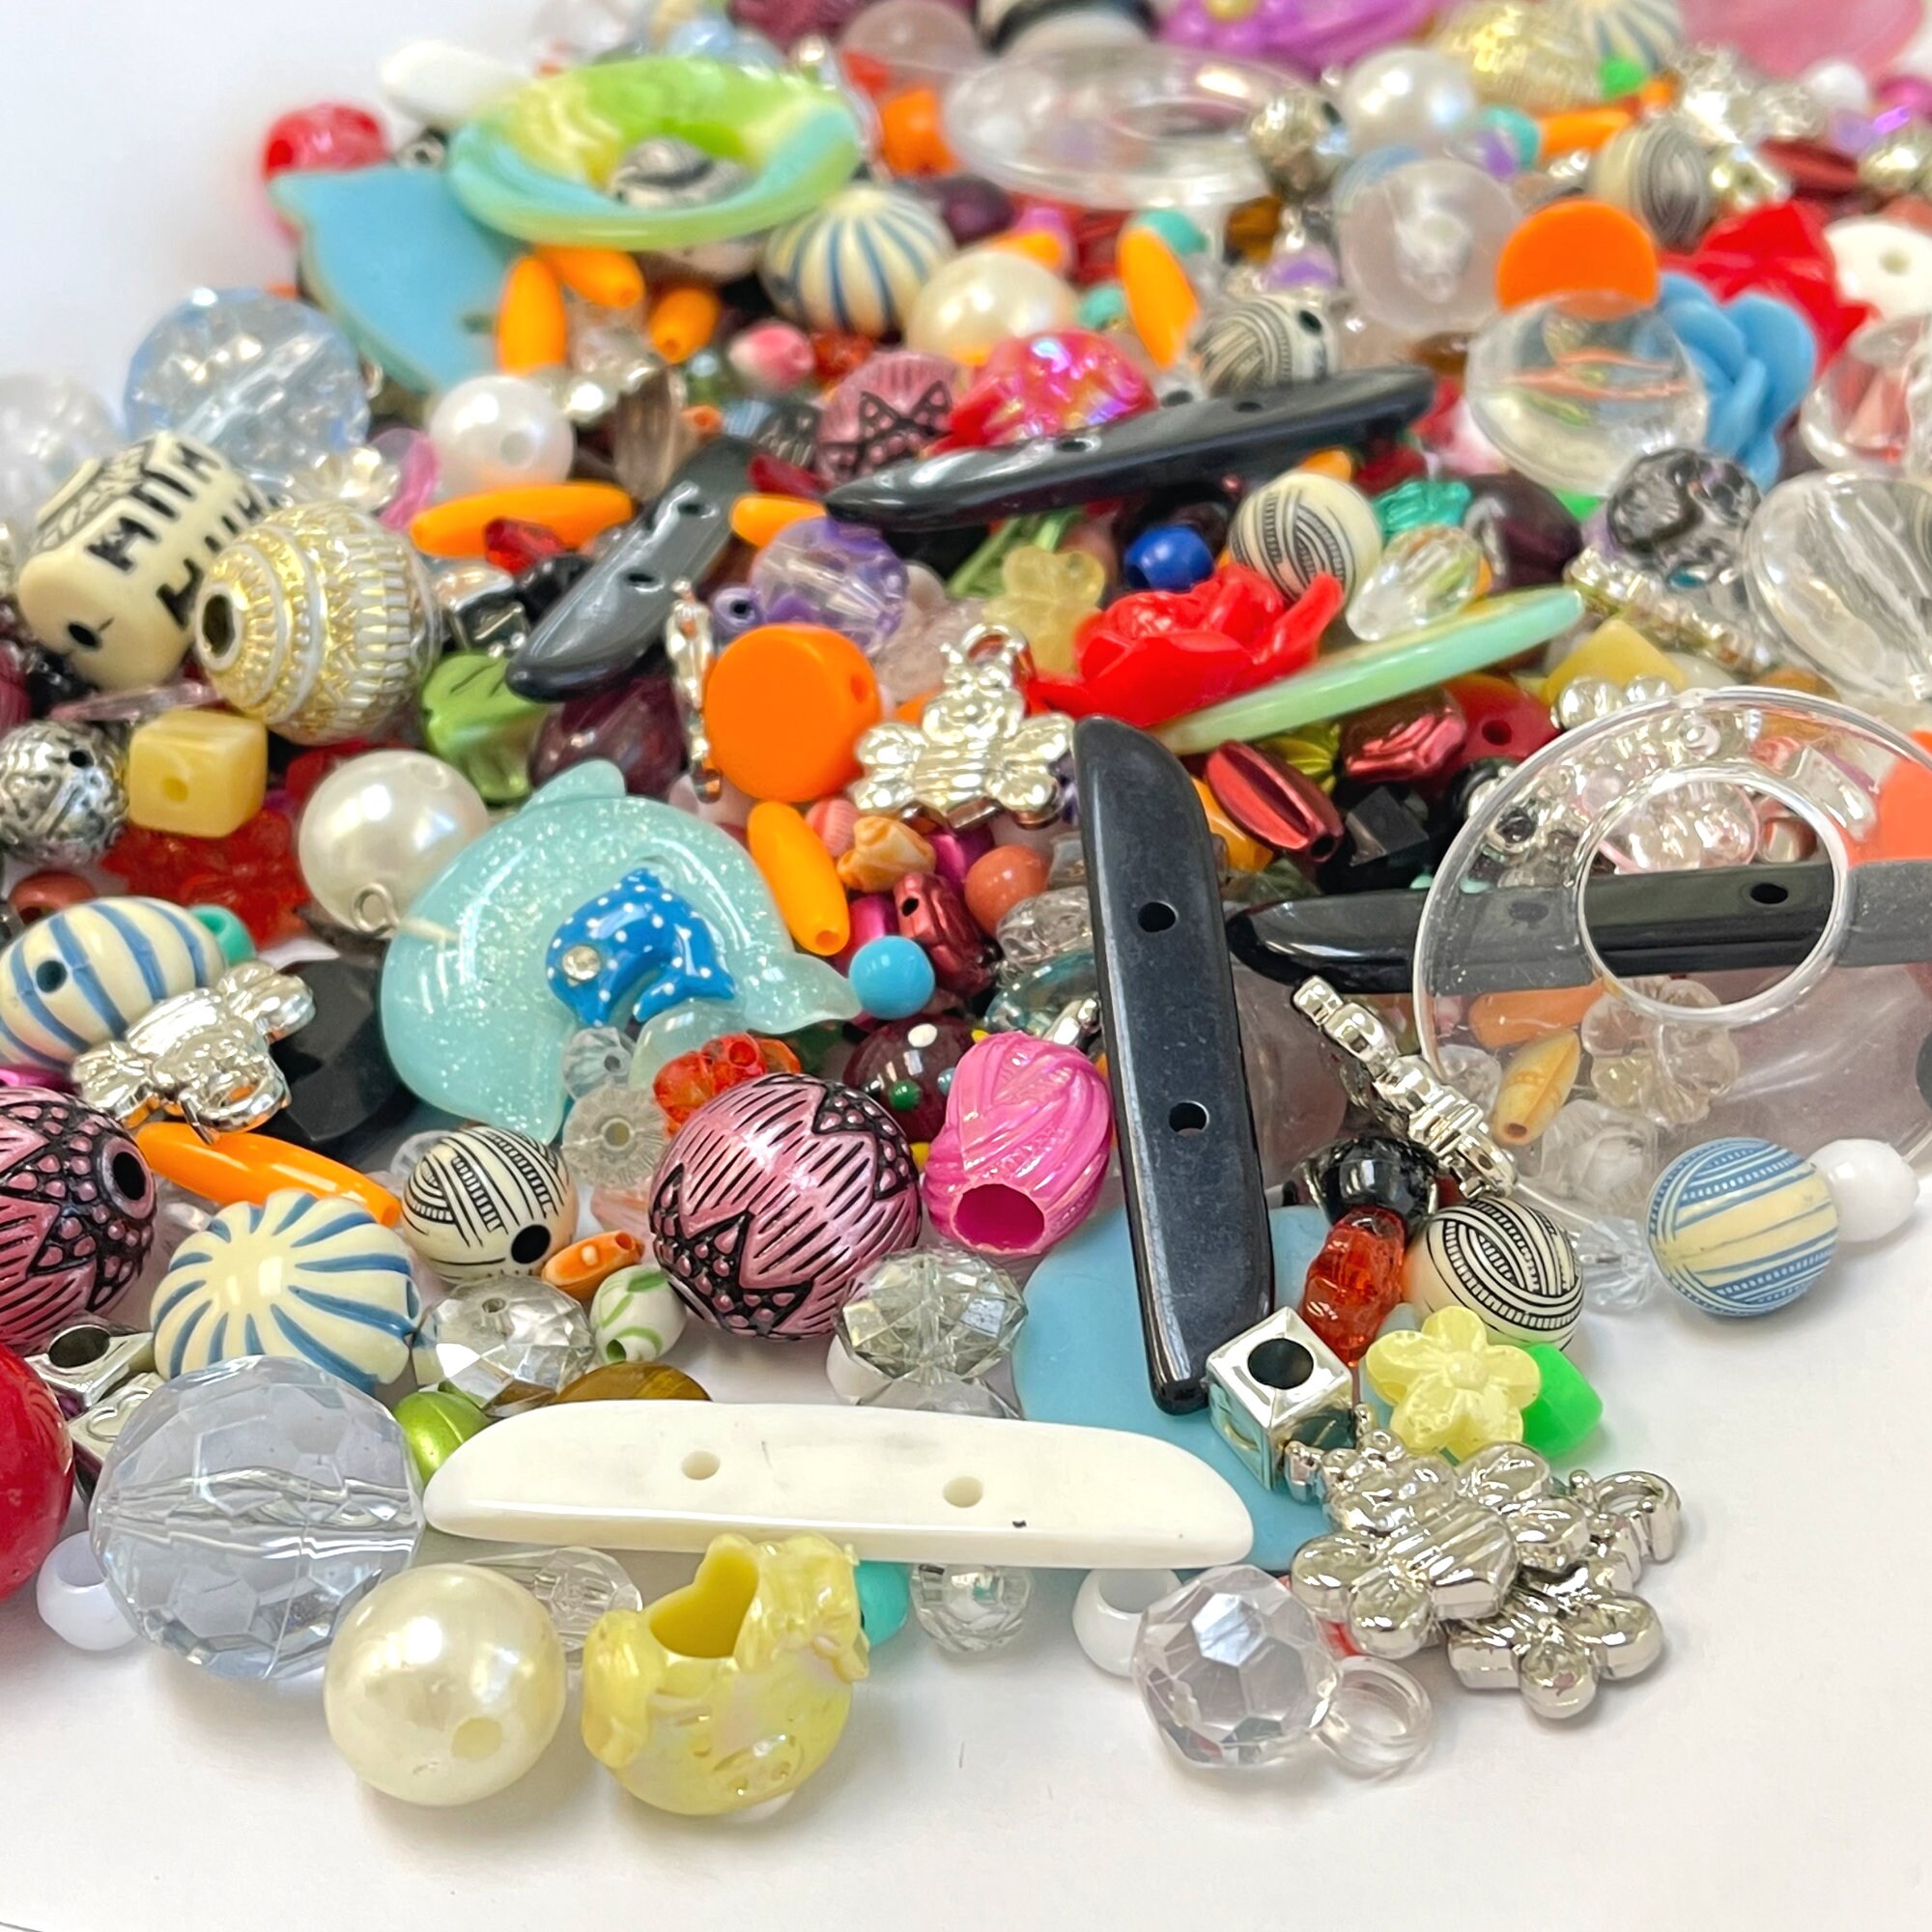 Bulk Acrylic Charms - 100 PC Mixed Plastic Charms and Pendants - Colorful Kawaii Jewelry Supply - Rave Kandi Charms